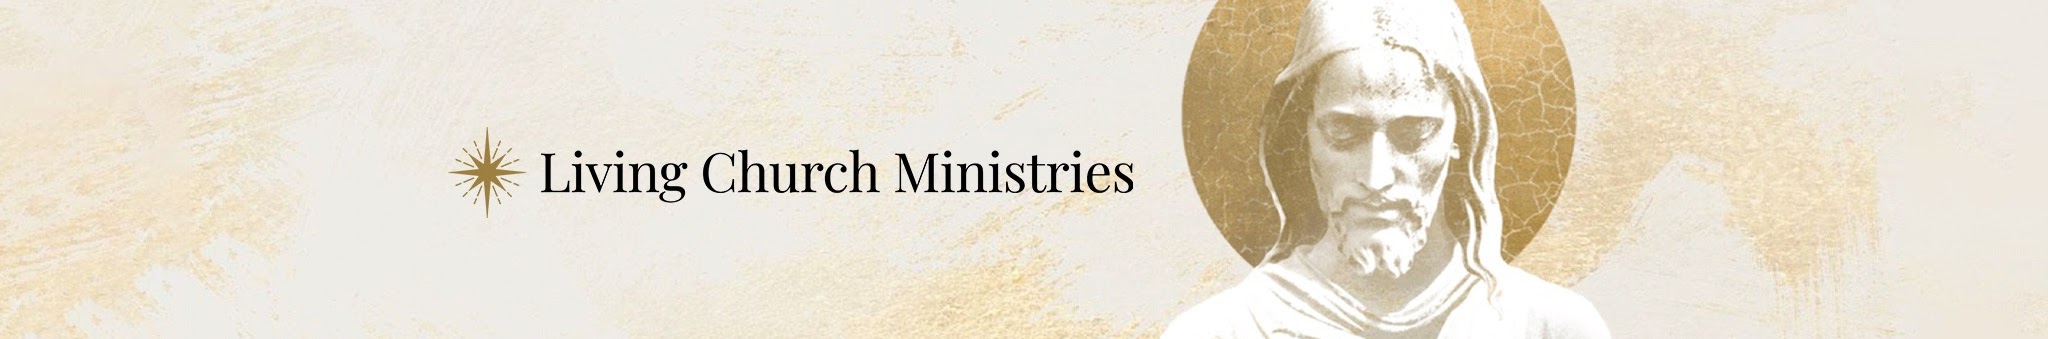 Living Church Ministries - On Tuby